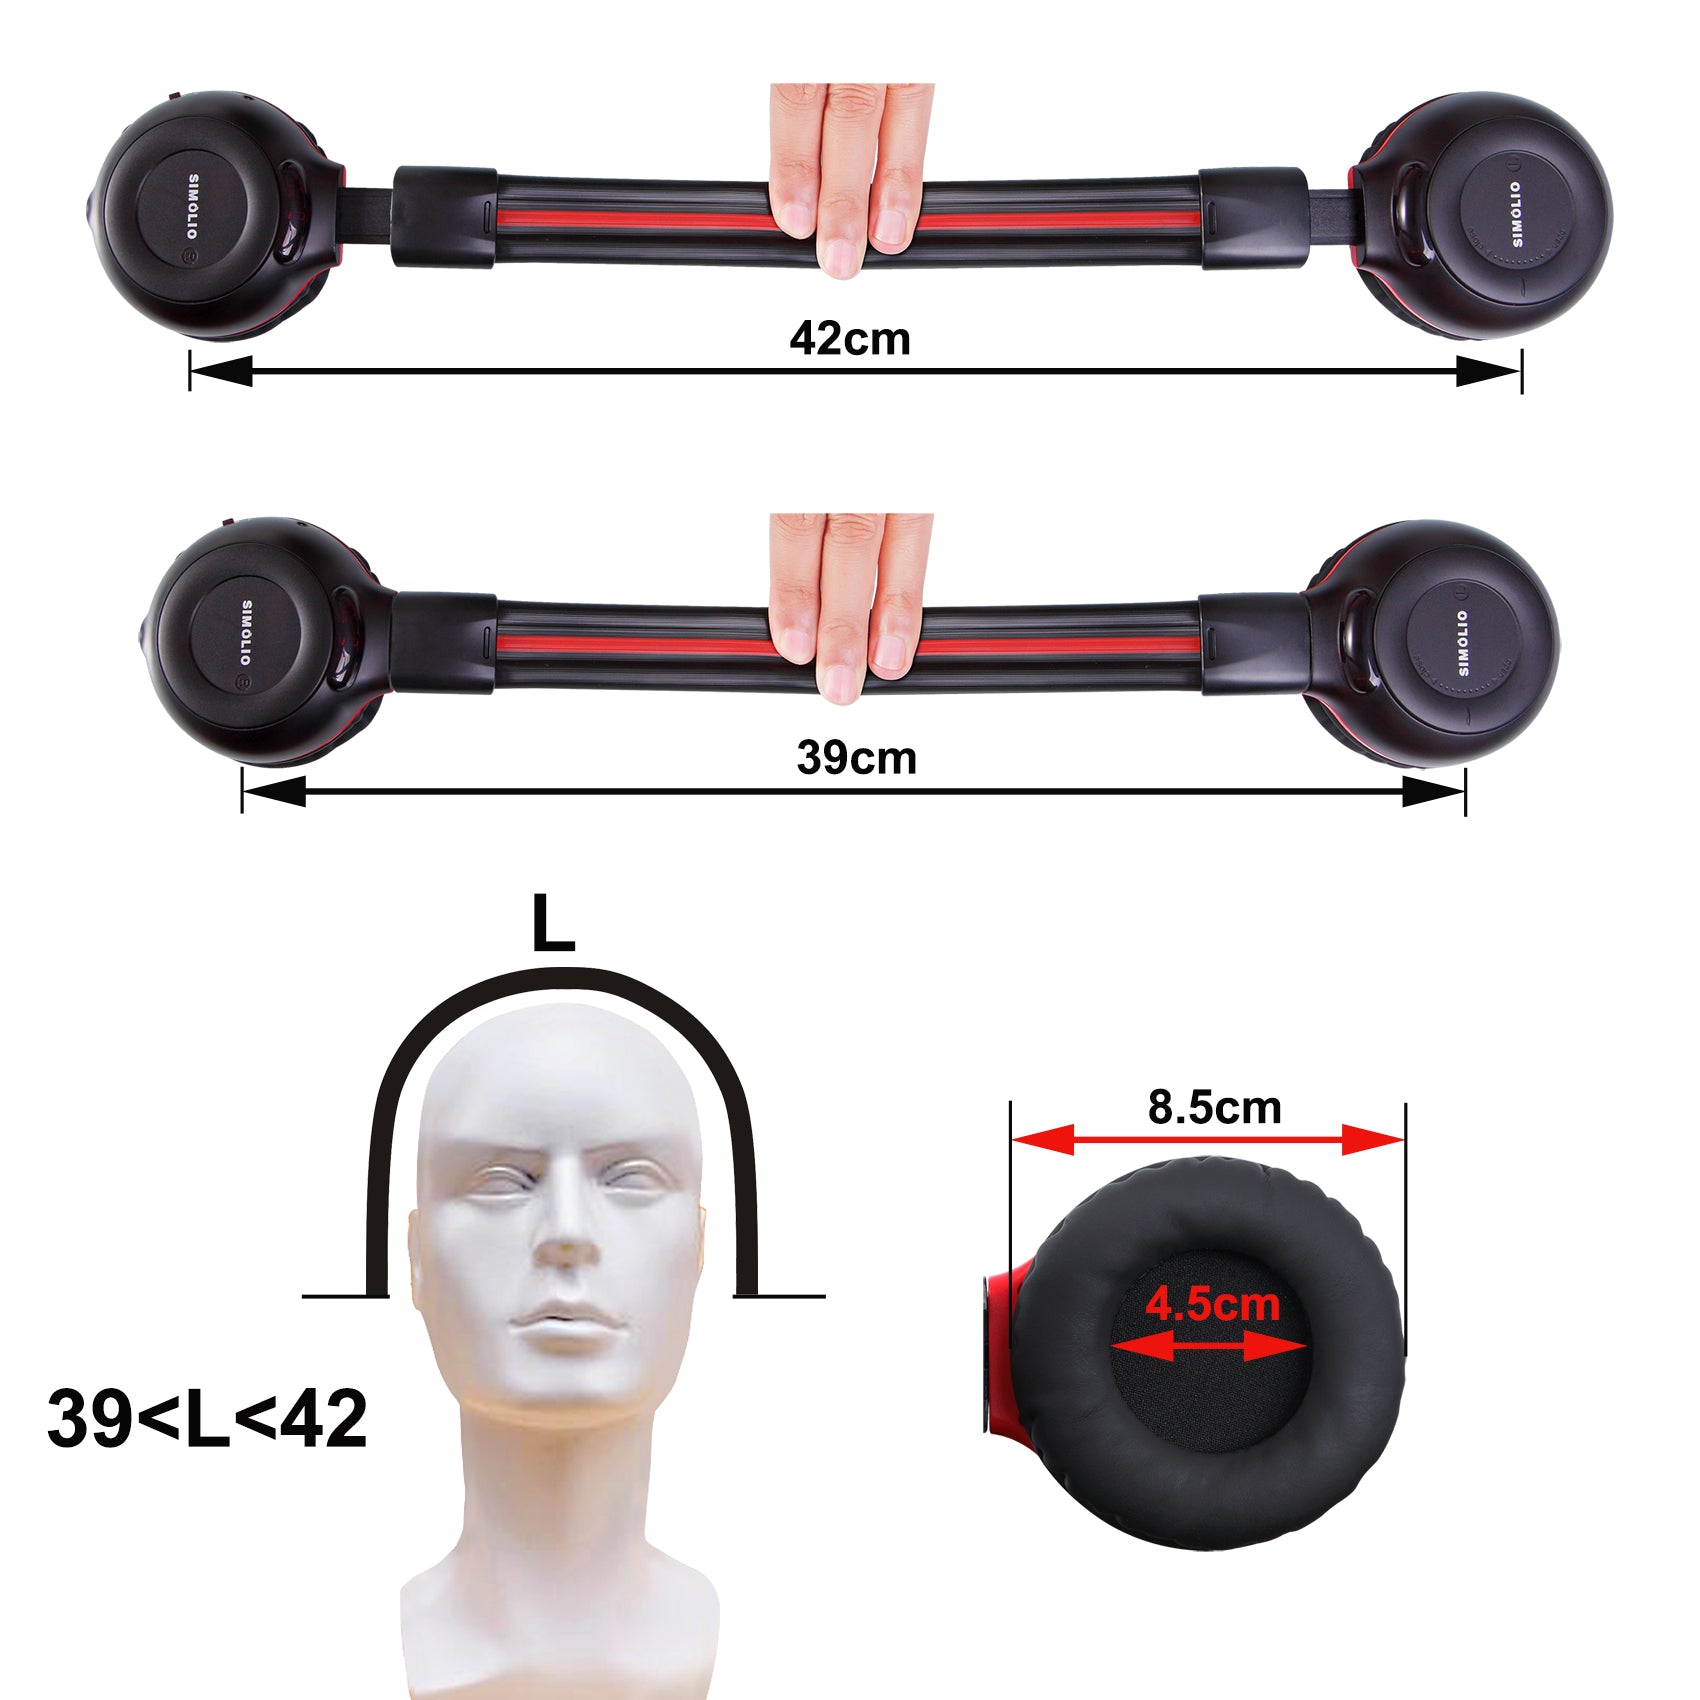 SIMOLIO SM-561B3 wireless car headphones with dual channels adjustable